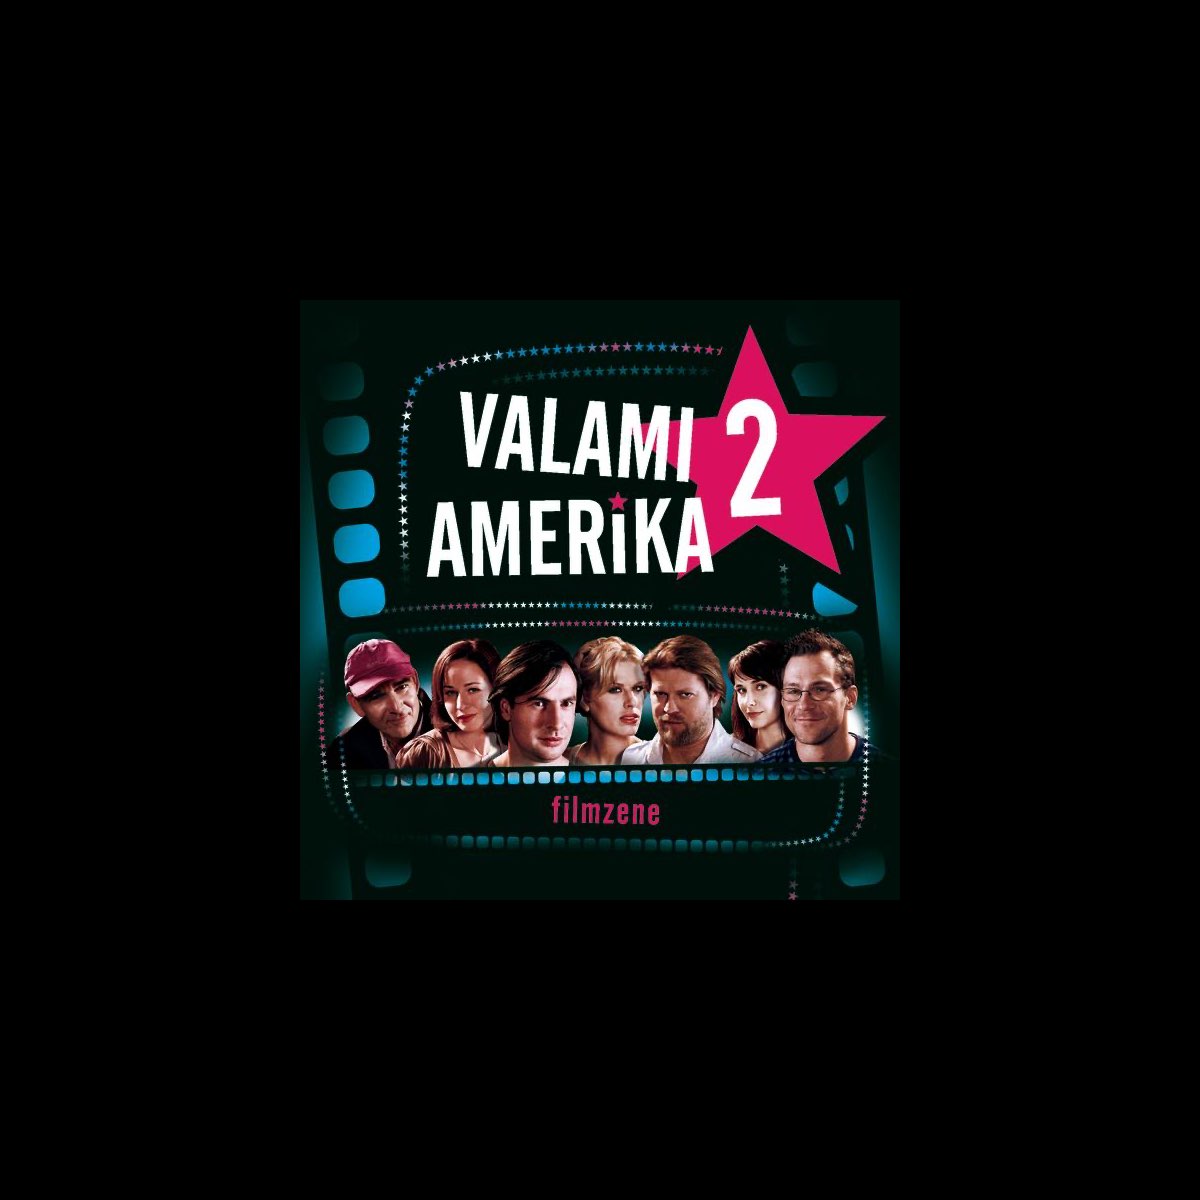 Valami Amerika 2 (Original Soundtrack) by Various Artists on Apple Music